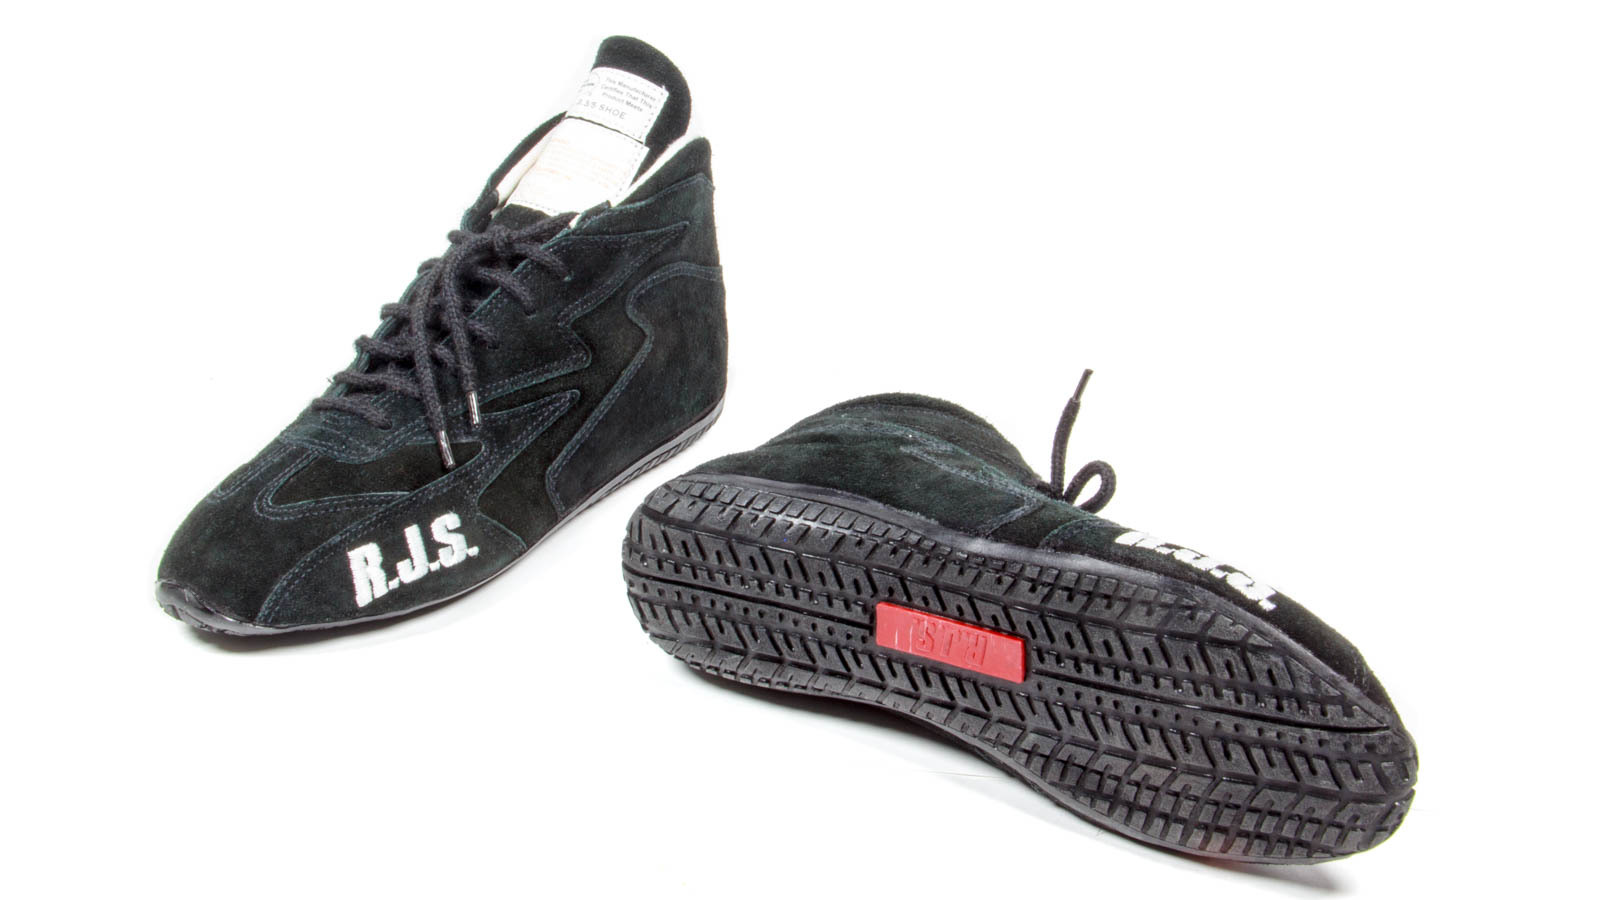 RJS, Redline Racing Shoe Mid-Top Black Size 9 SFI-5